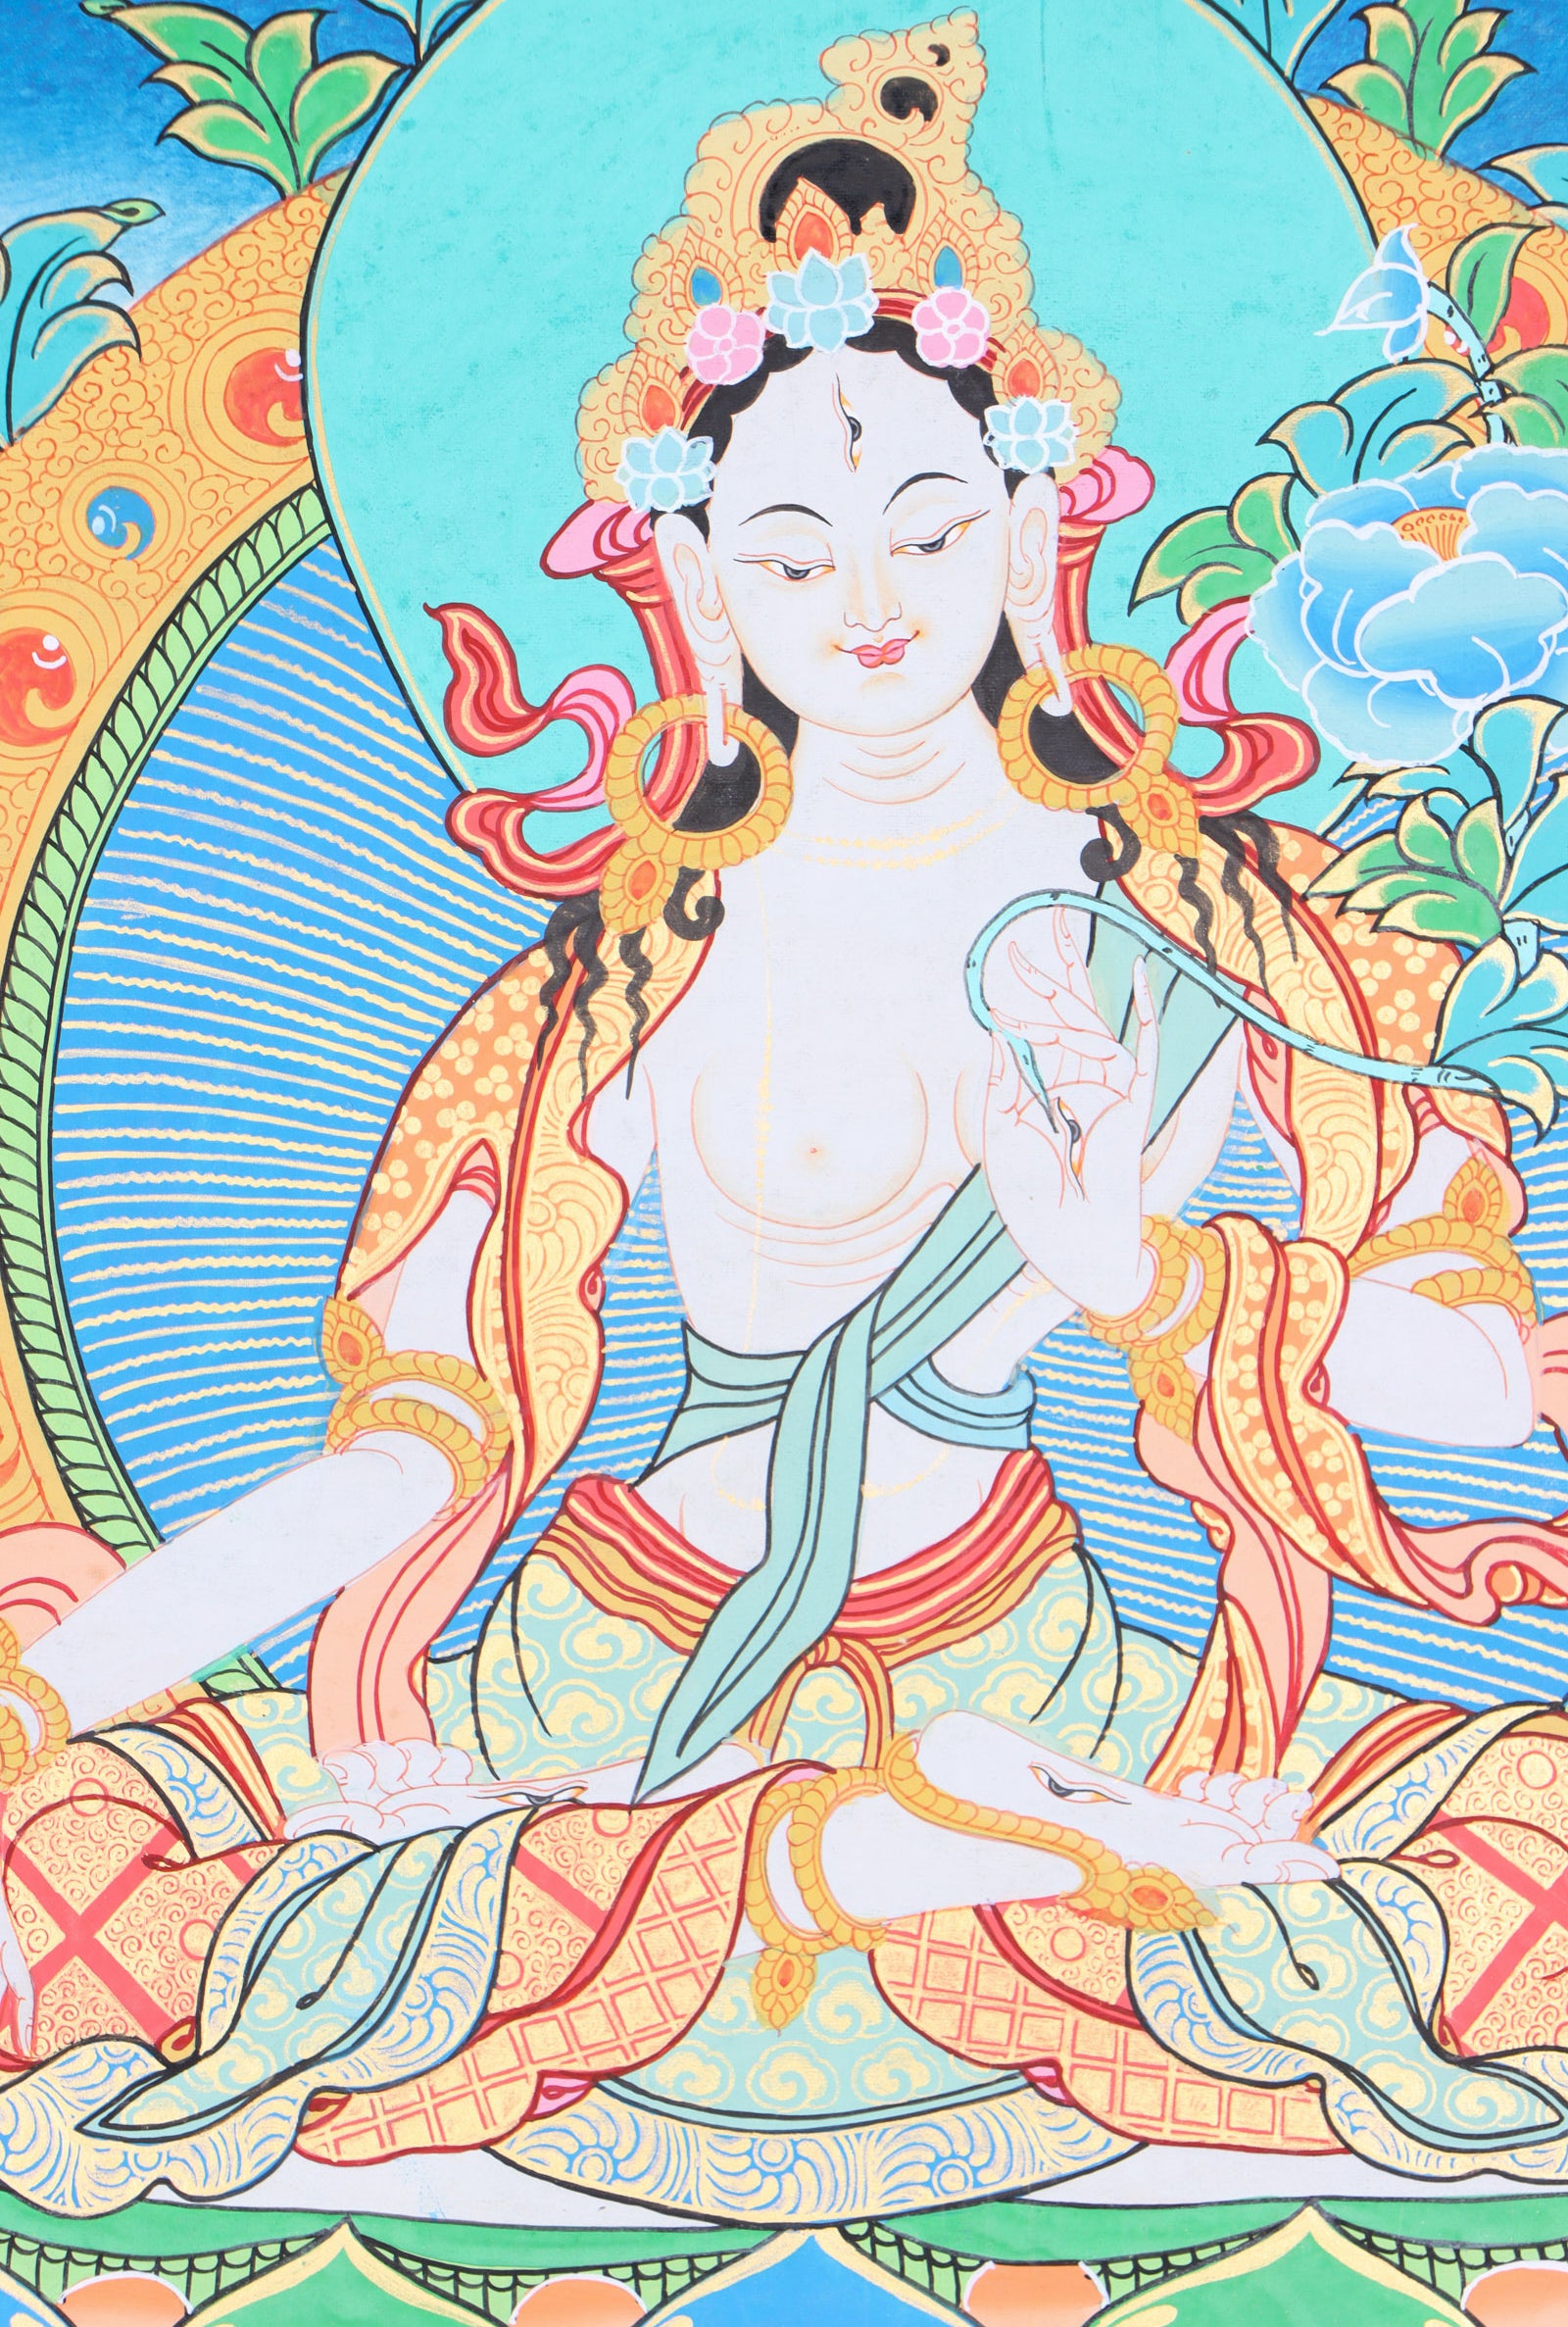 White Tara thangka painting for compassion, longevity, and healing.